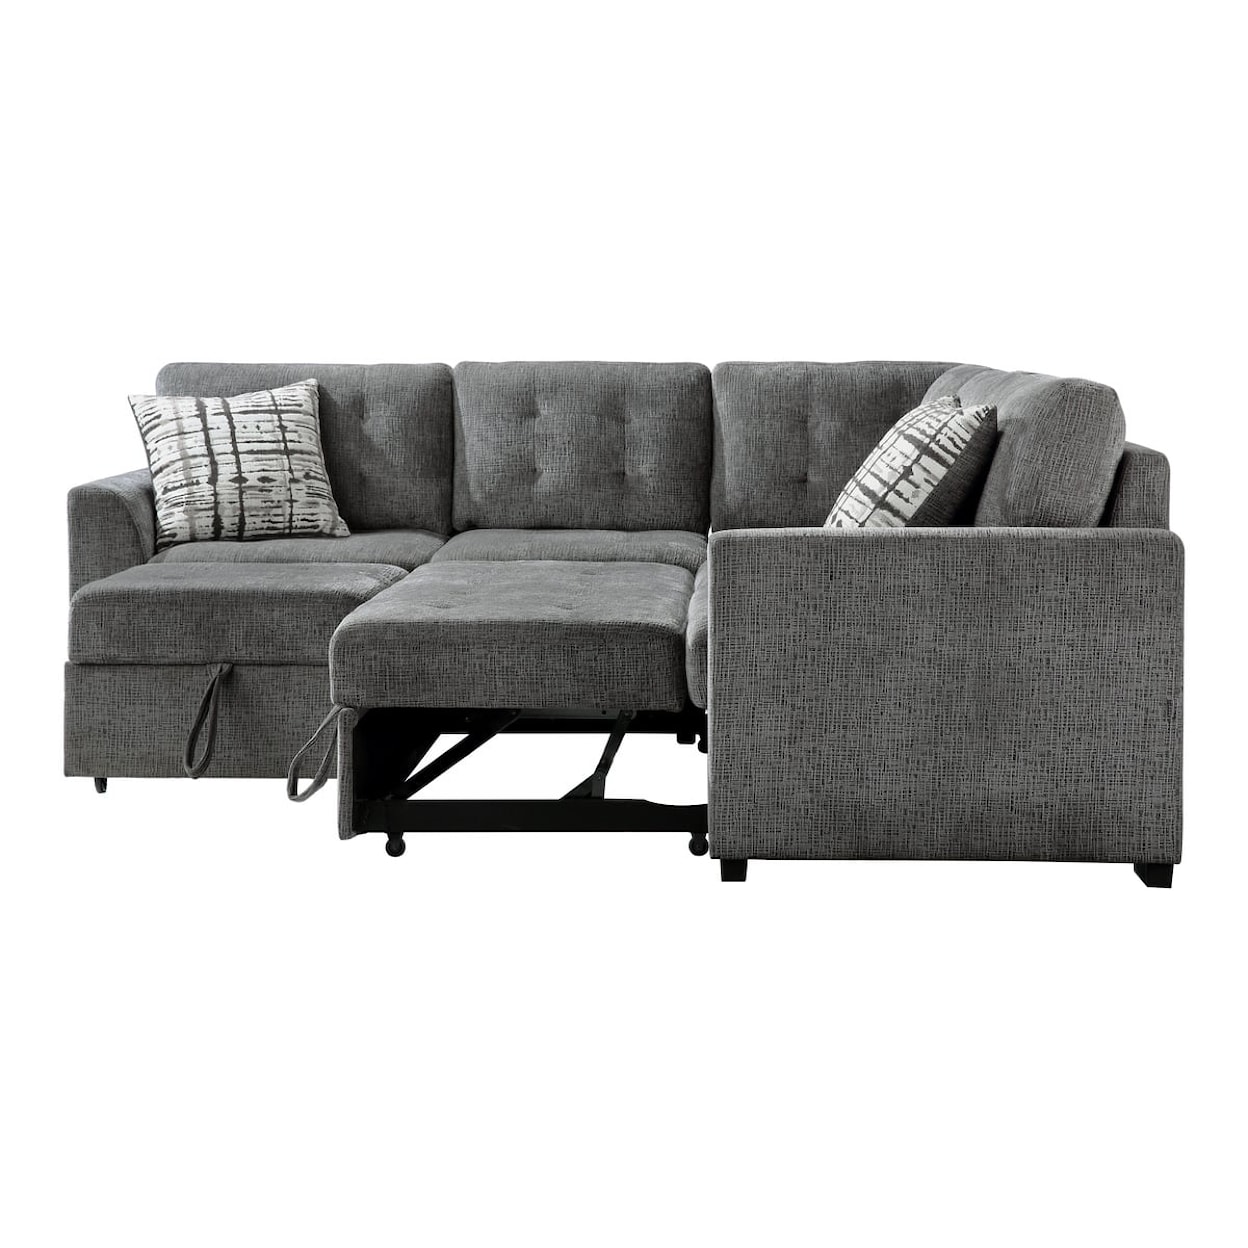 Homelegance Lanning 3-Piece Sectional Sofa